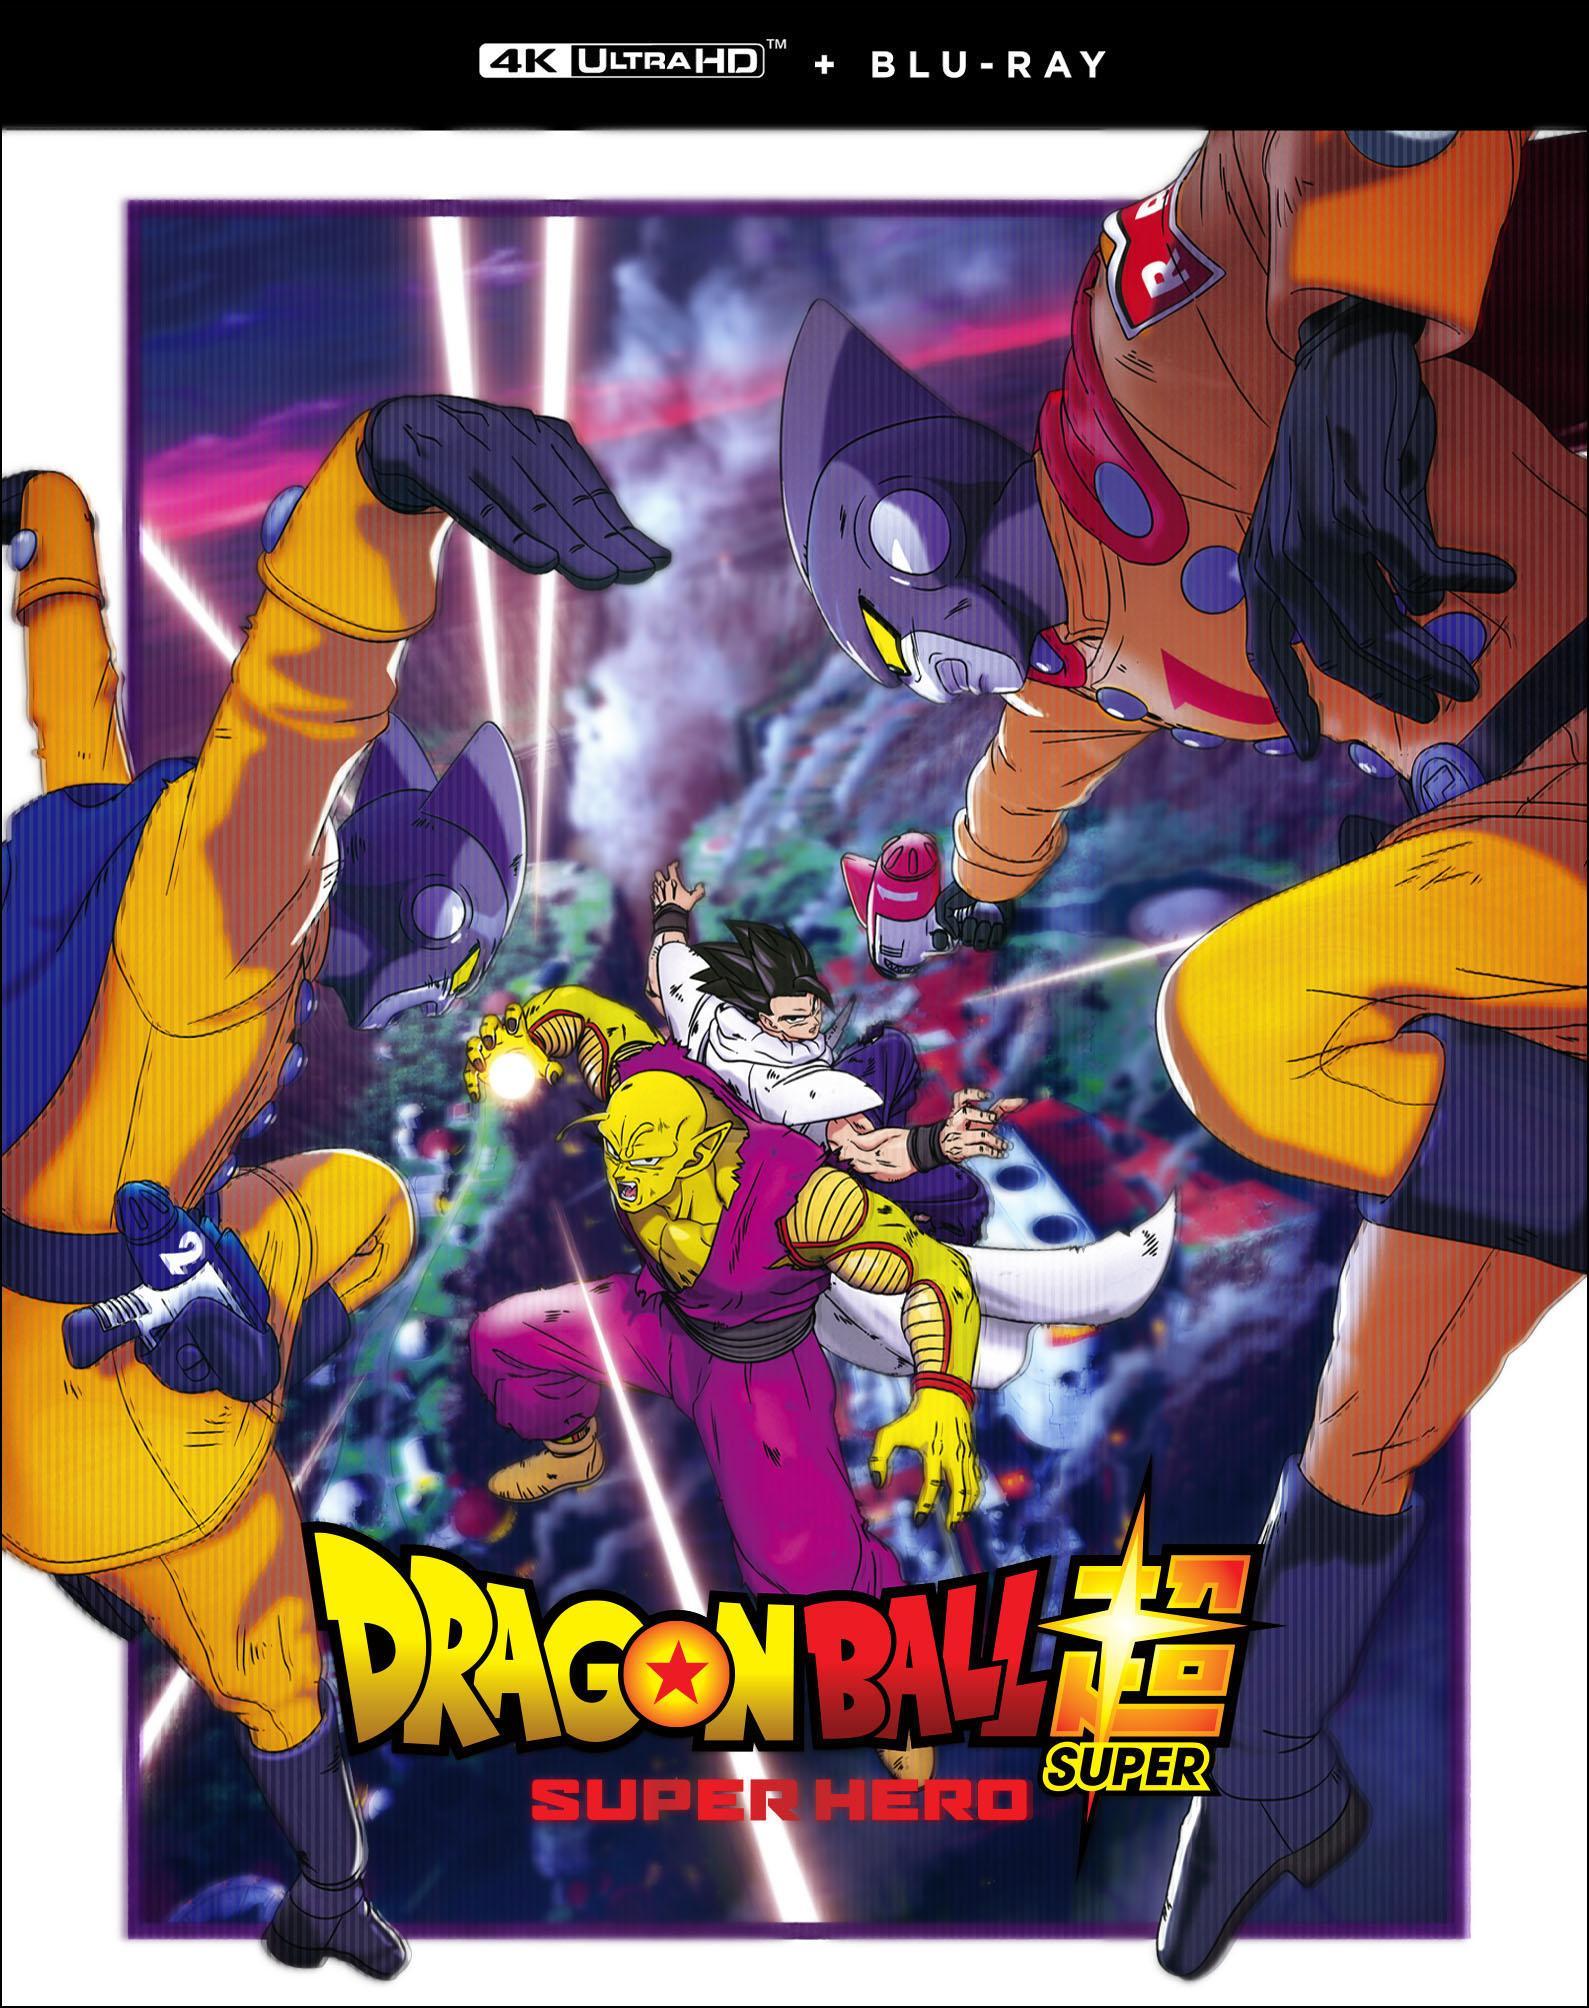 Dragon Ball Super: Super Hero (4K Ultra HD + Blu-ray) - UHD